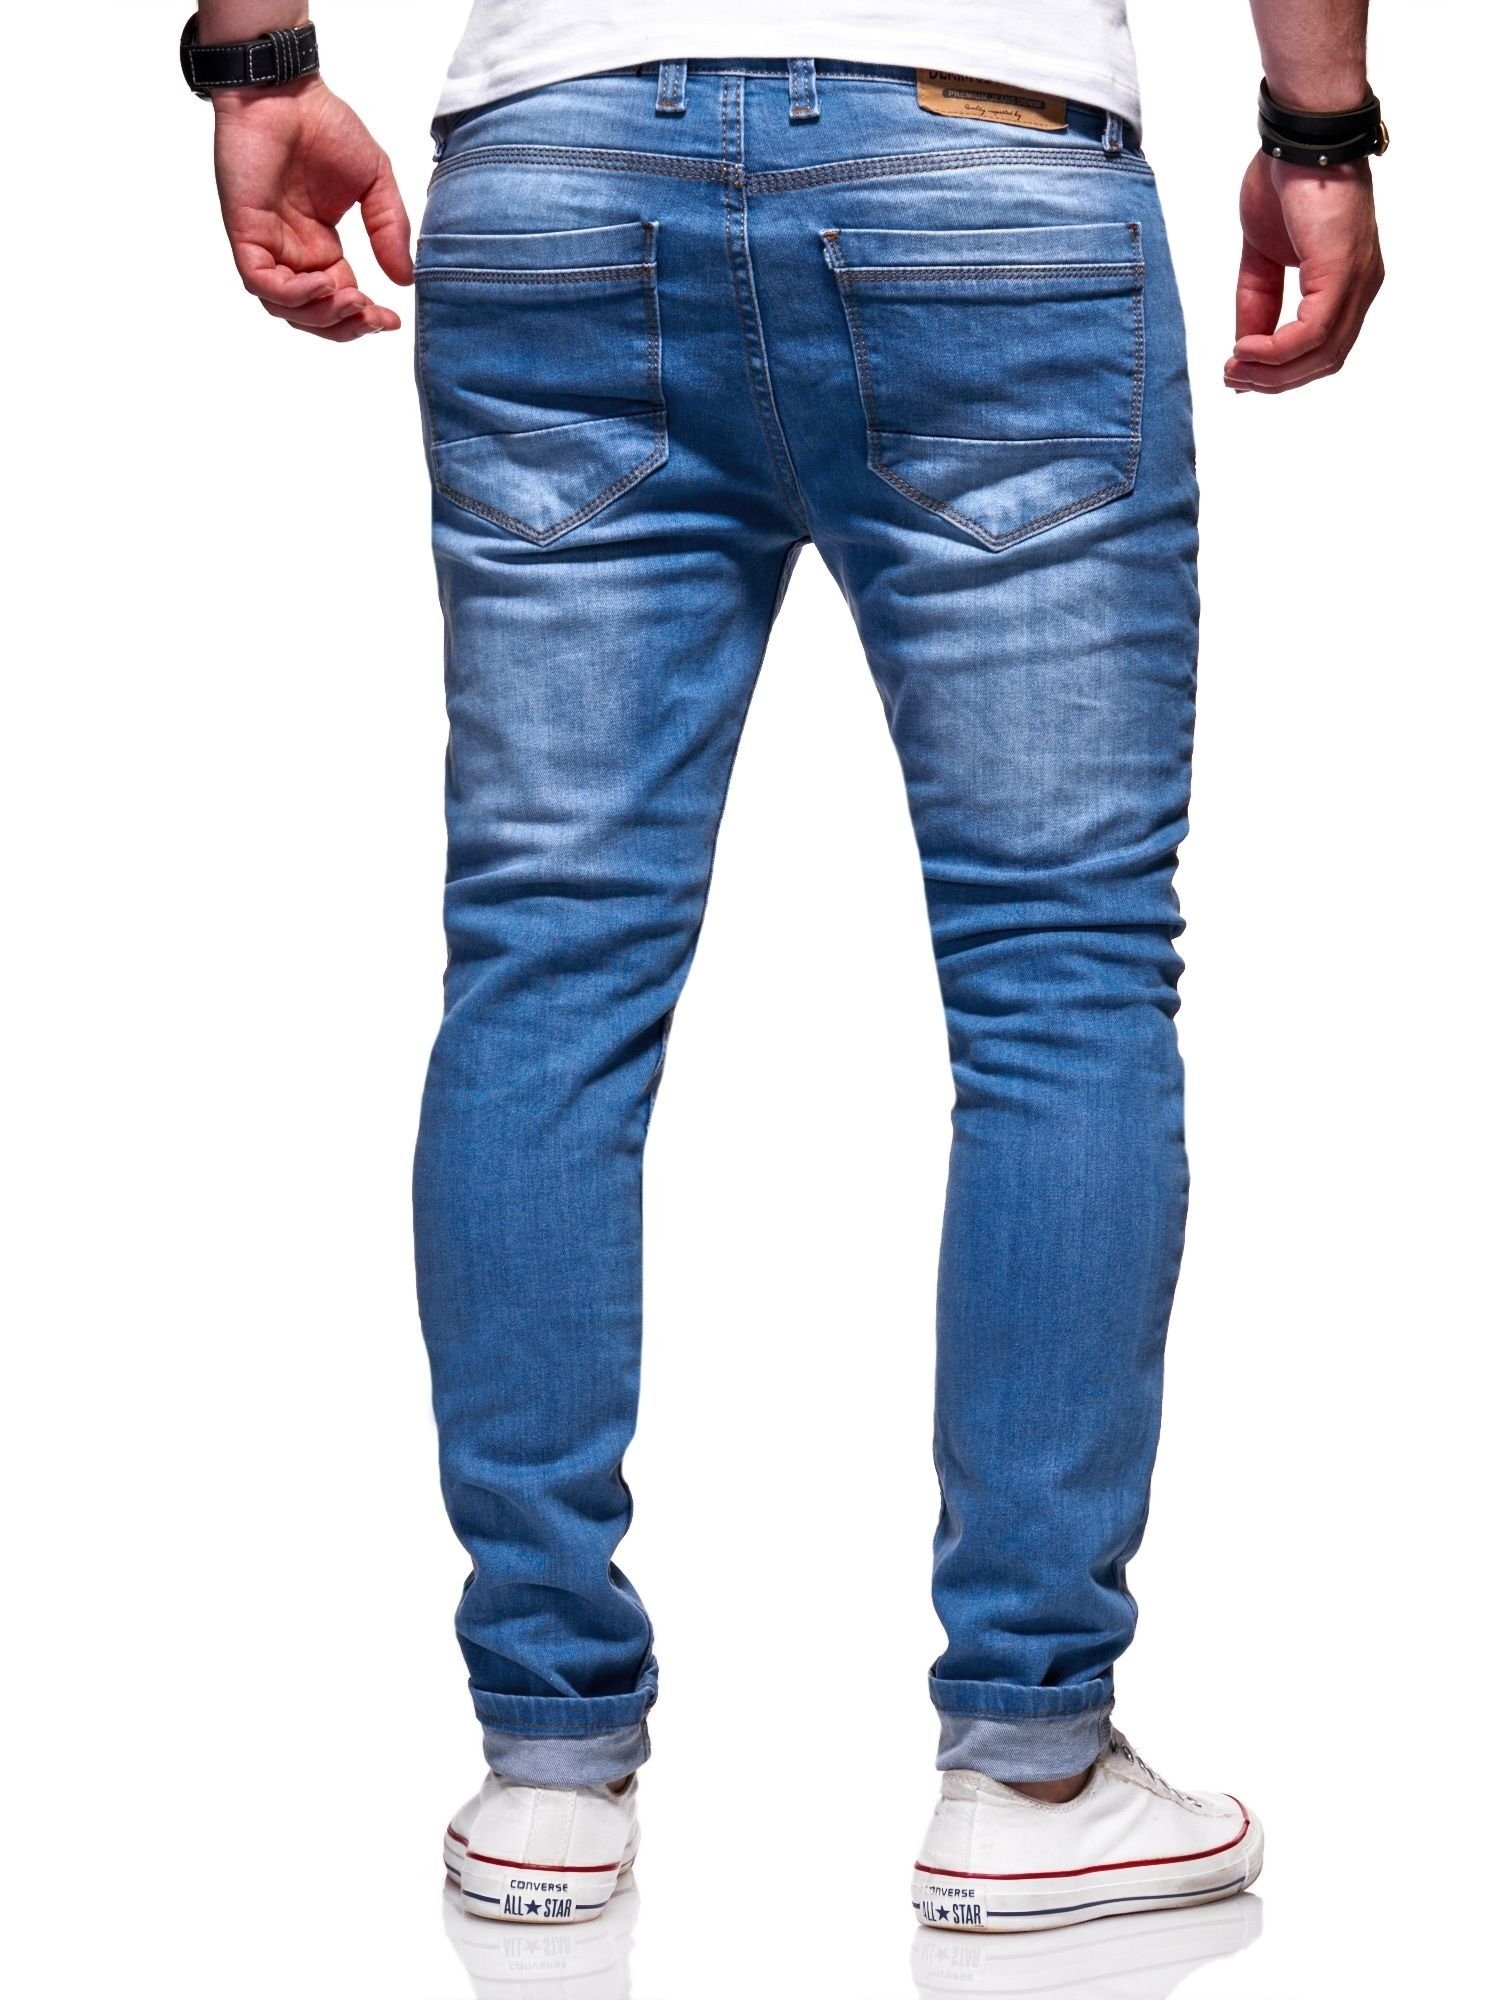 behype Slim-fit-Jeans mit trendigen blau J-5118 Destroyed-Elementen